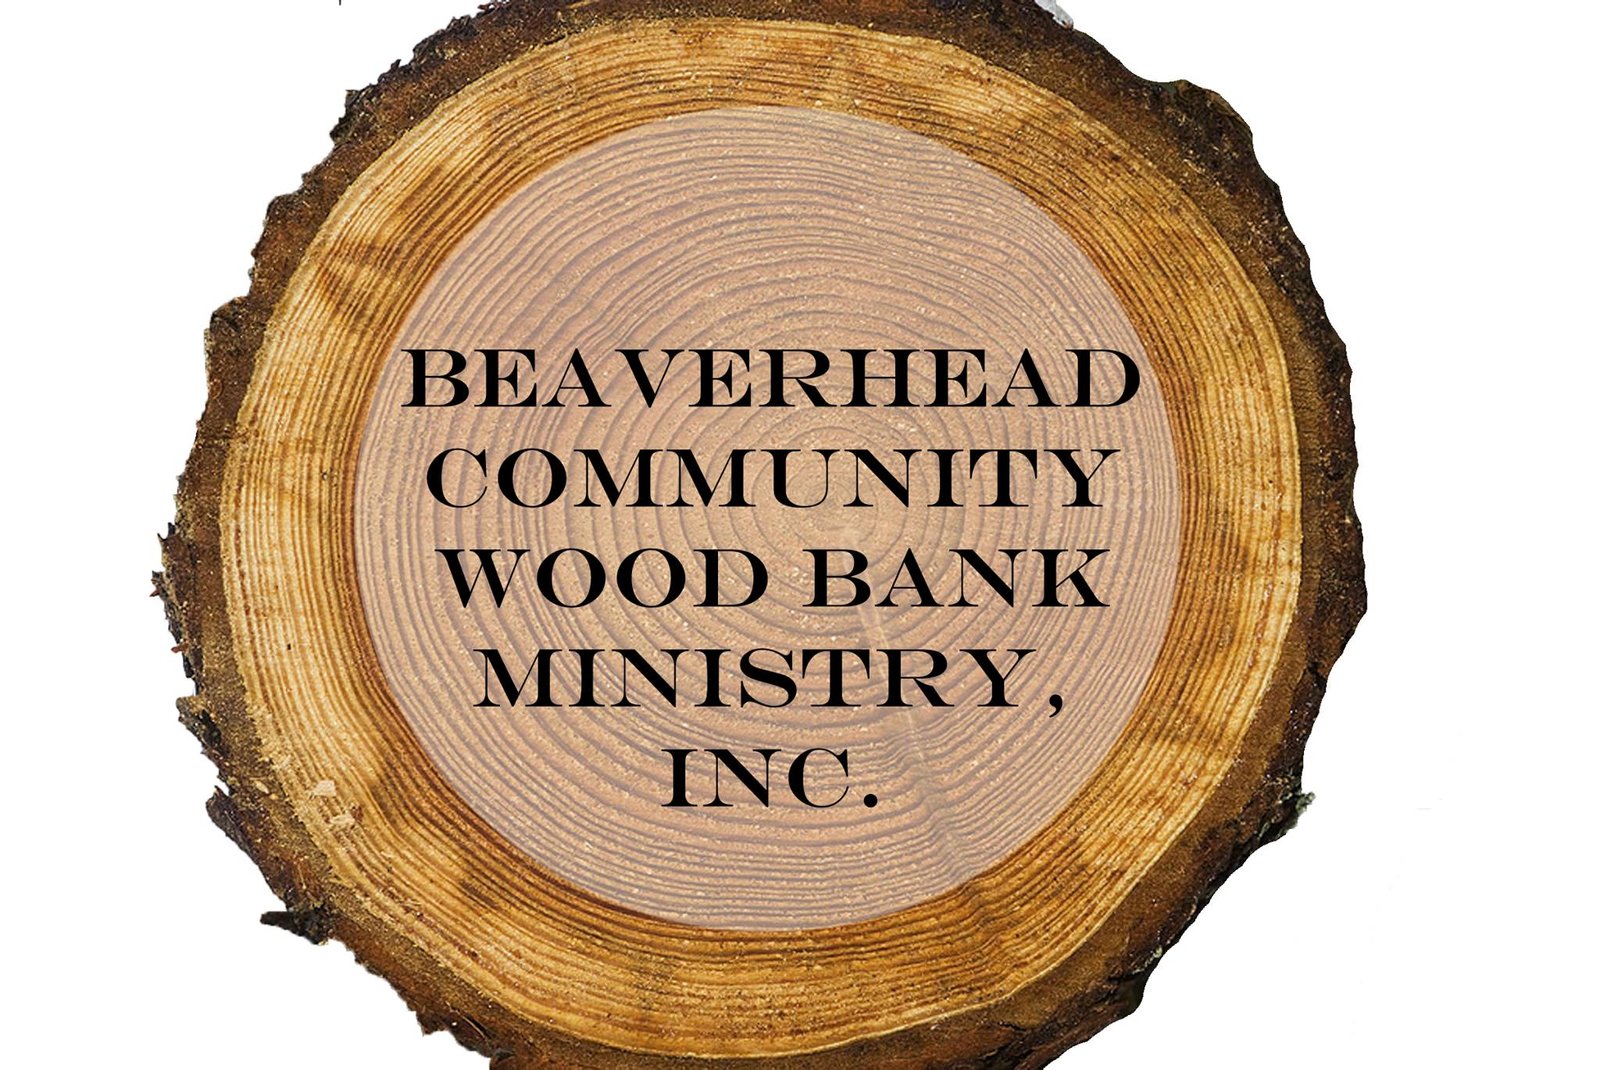 Beaverhead Community Wood Bank Ministry Inc.